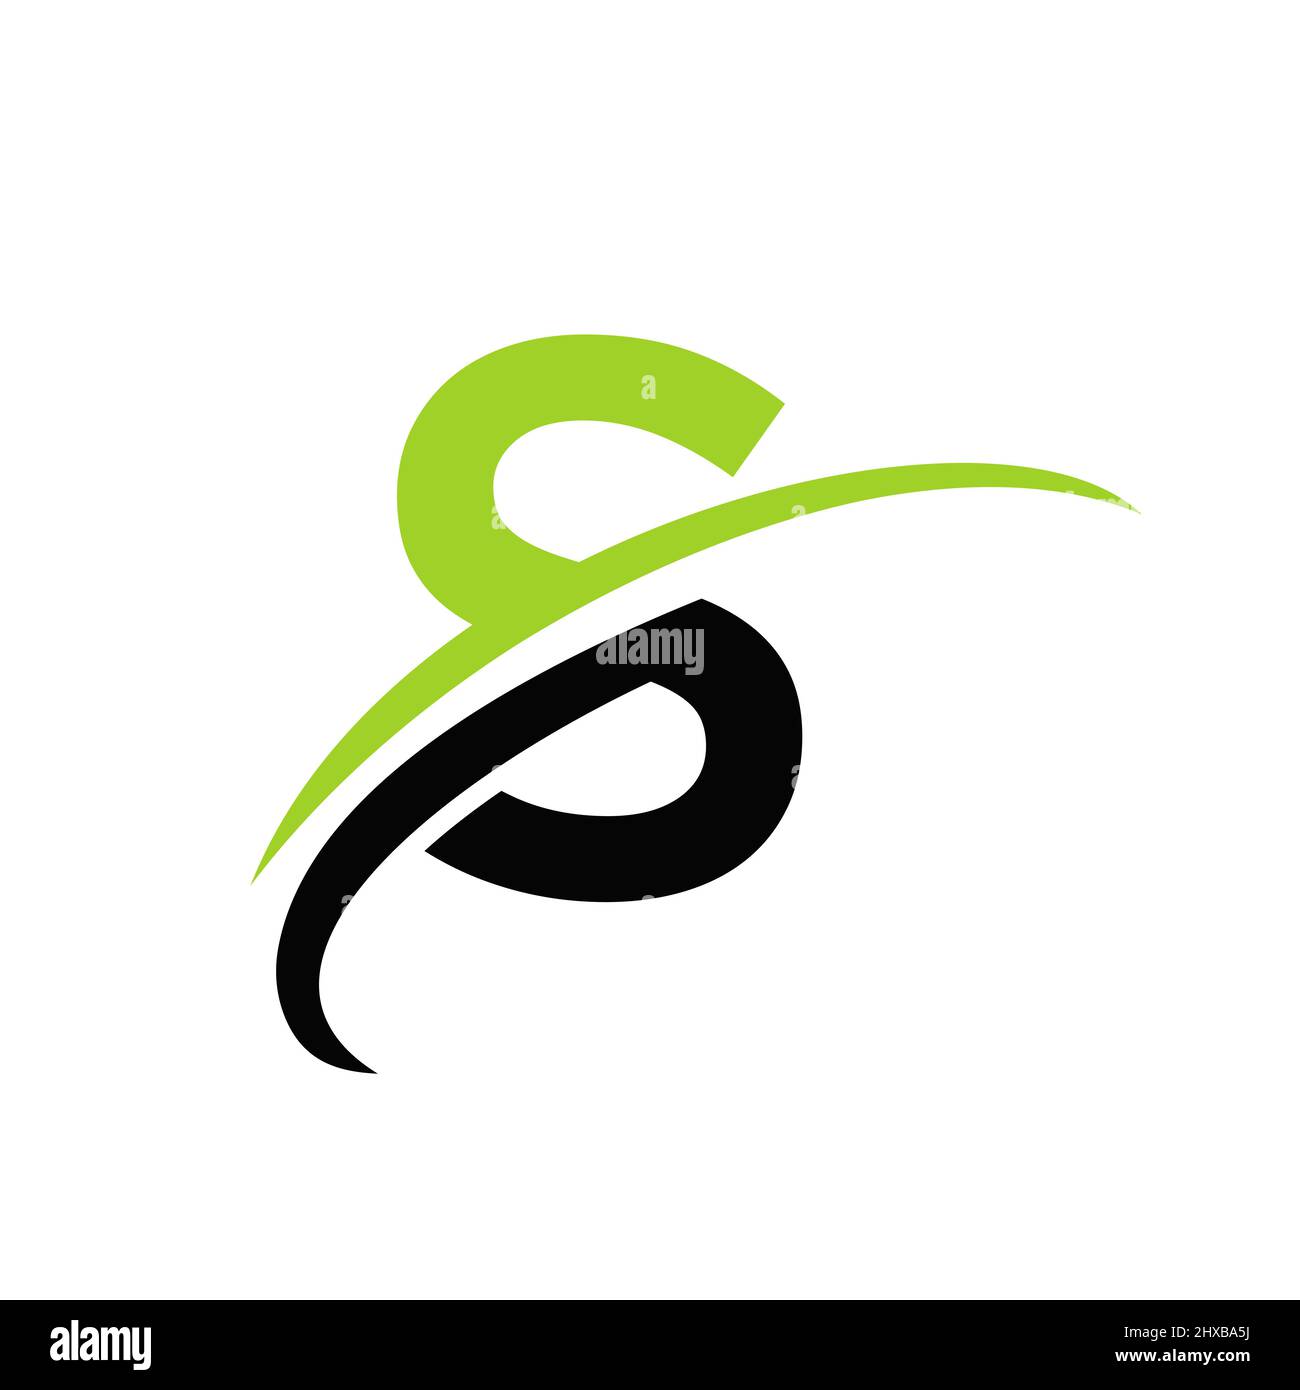 S logo design